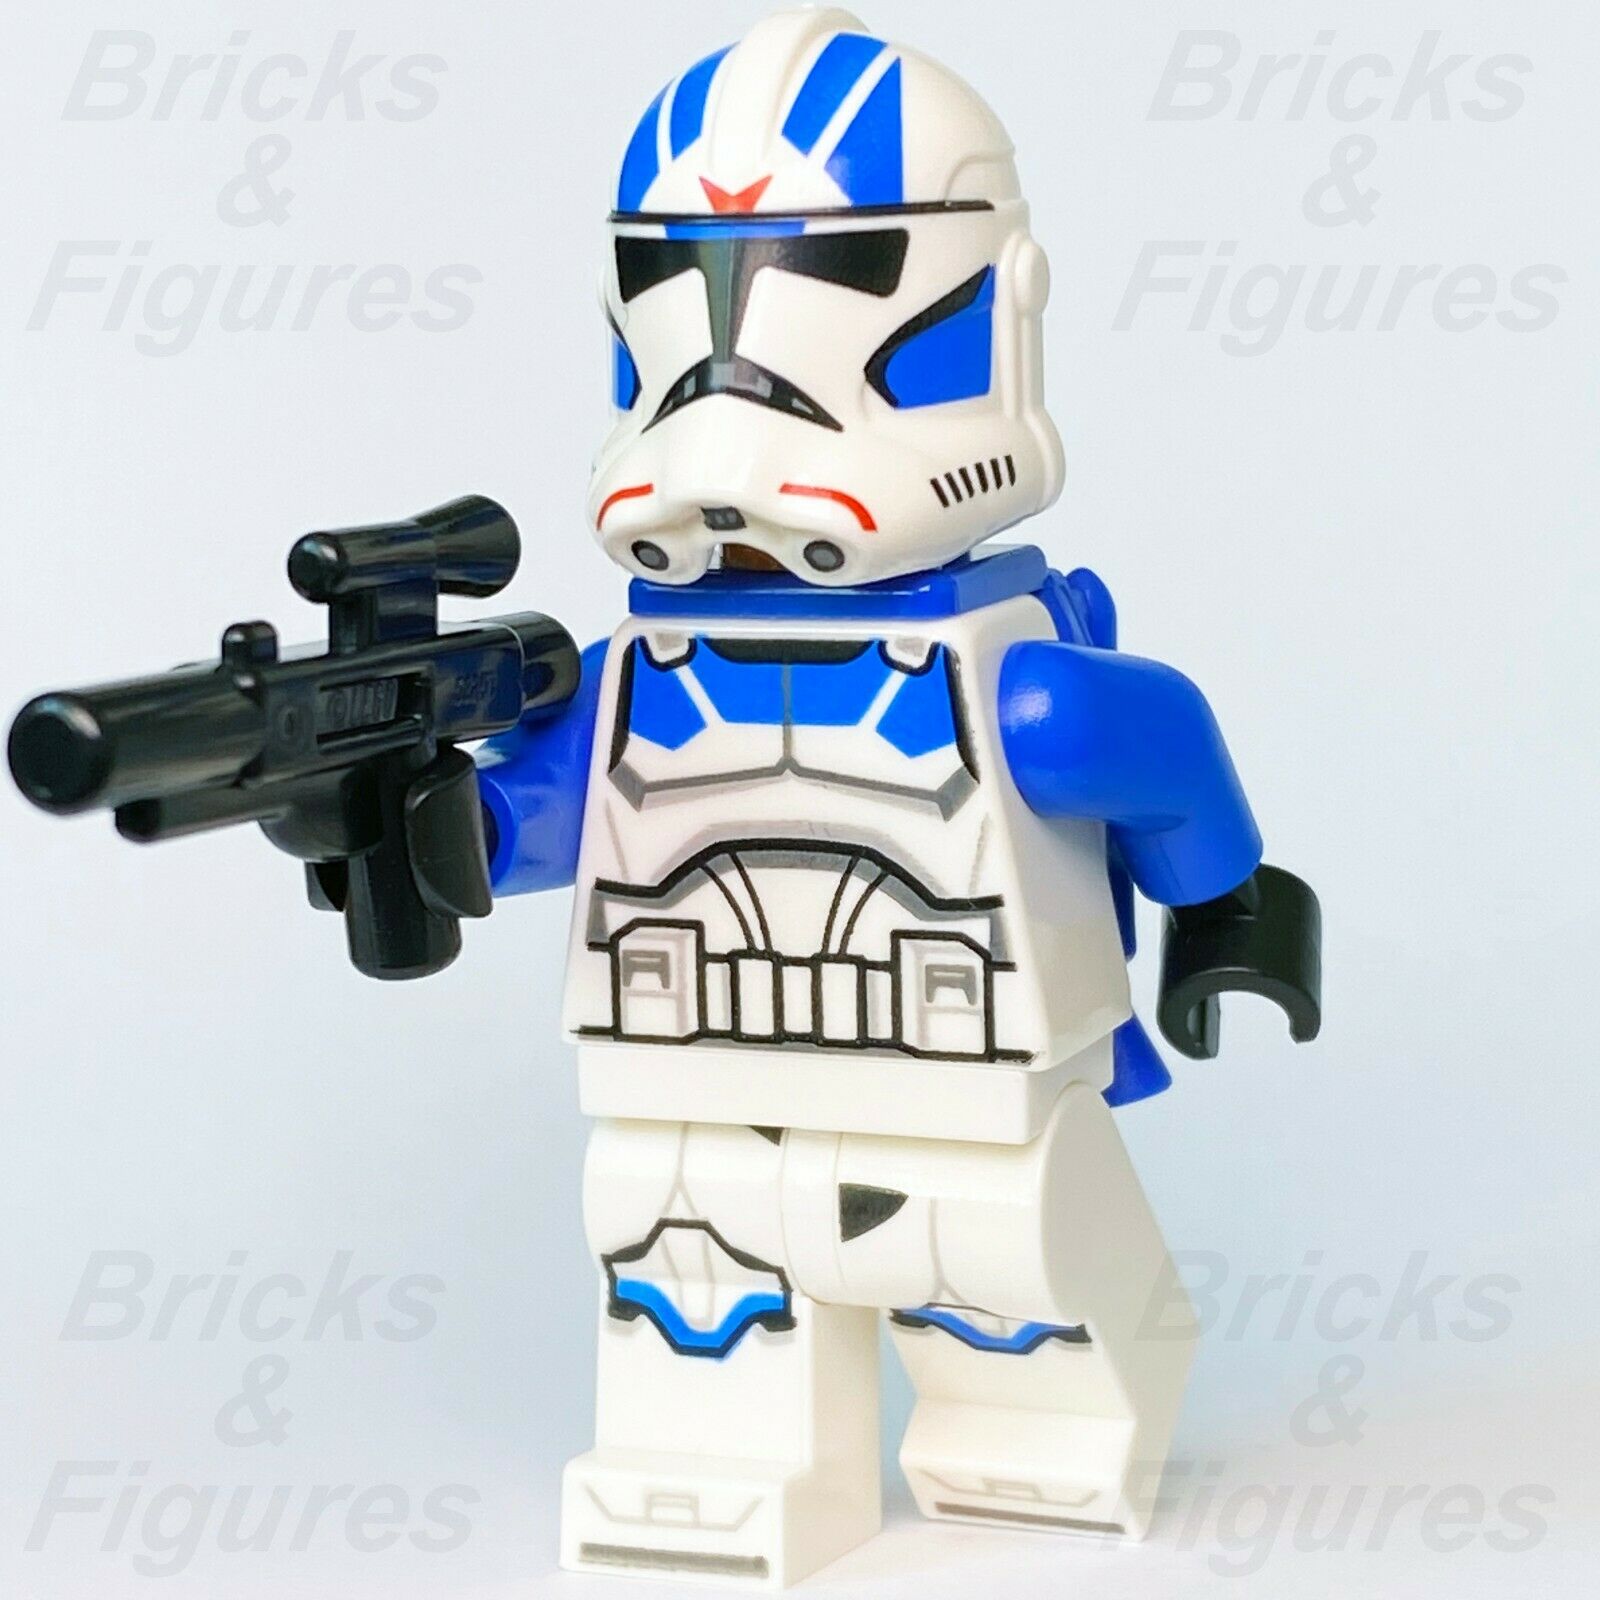 New Star Wars LEGO 501st Legion Clone Jet Trooper Episode 3 Minifigure 75280 - Bricks & Figures